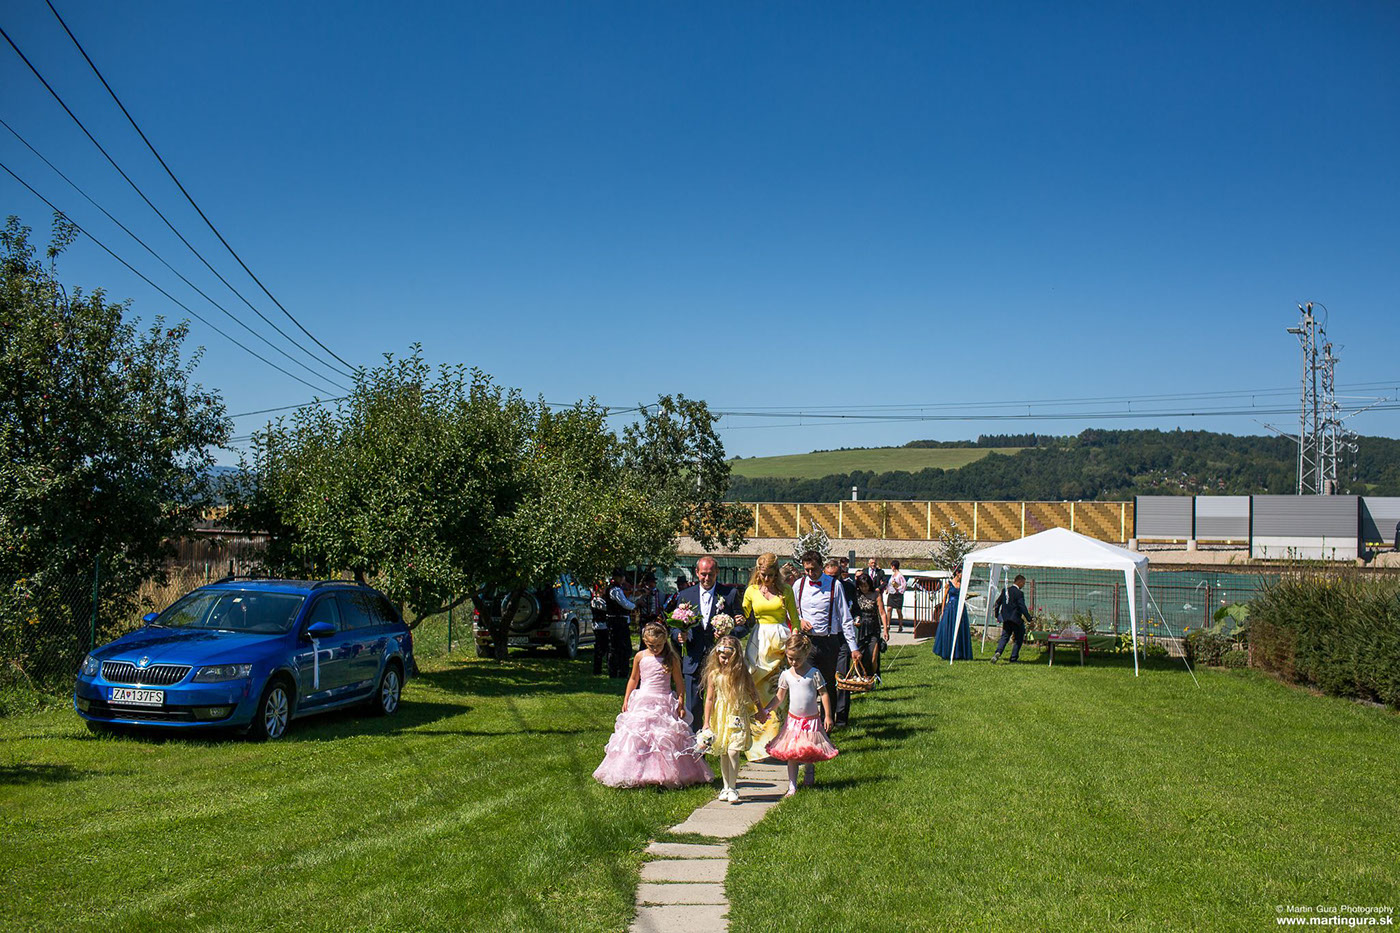 wedding svadba slovakia zilina photo foto